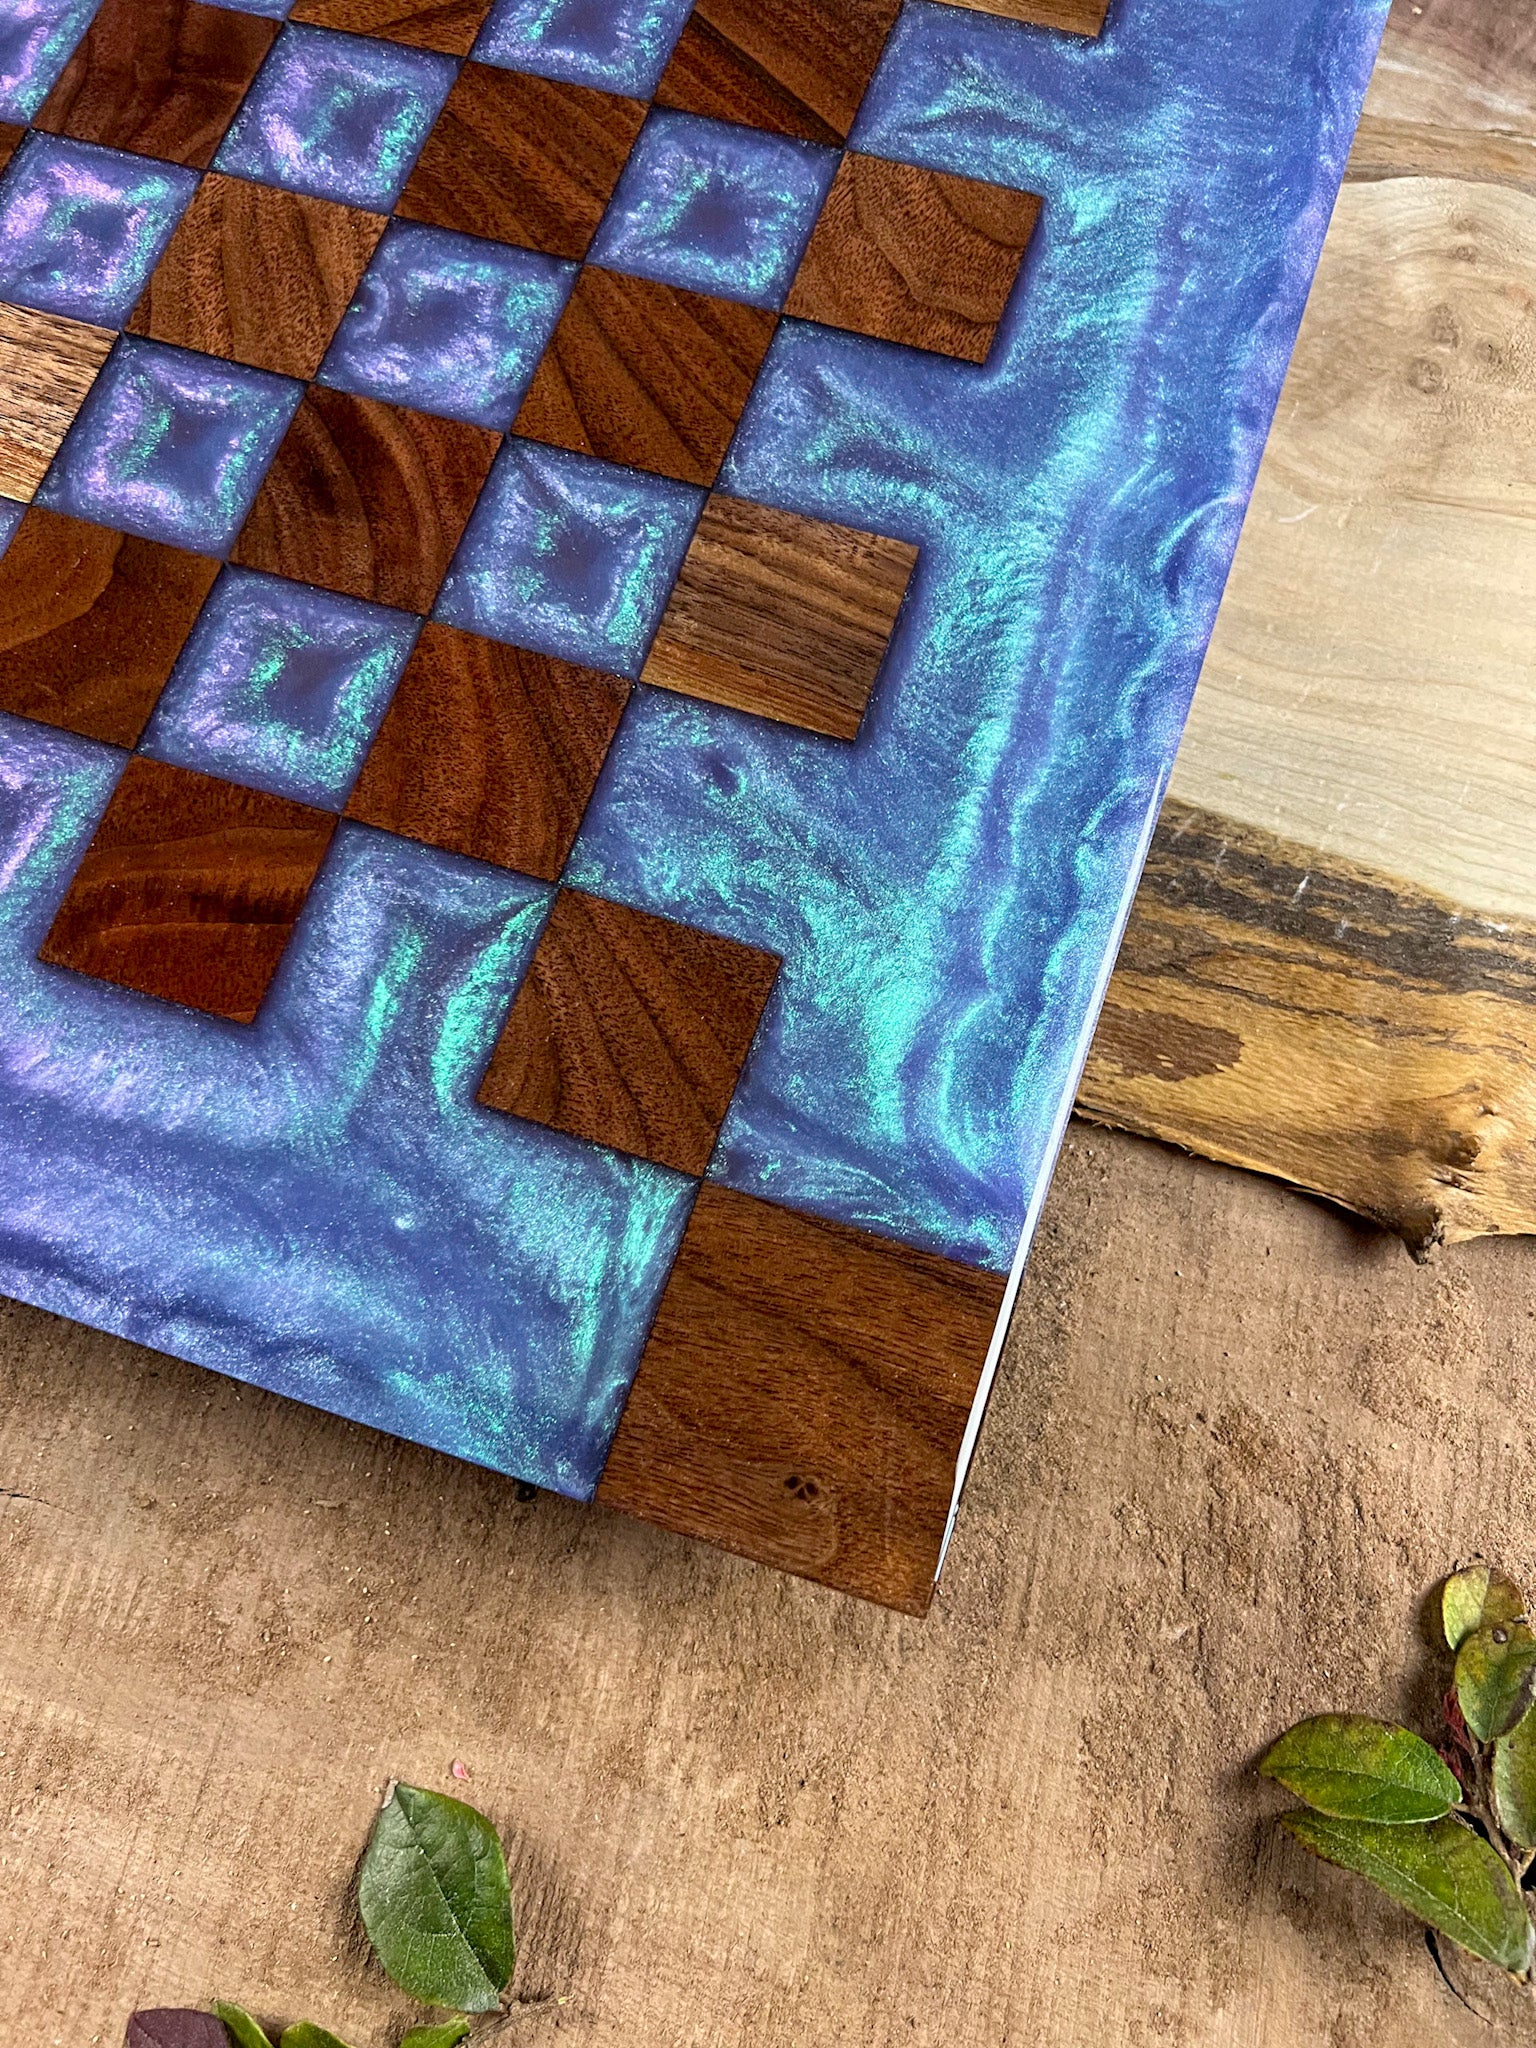 Merlin's Desire Walnut Chess Board (Chameleon Color Shifting)